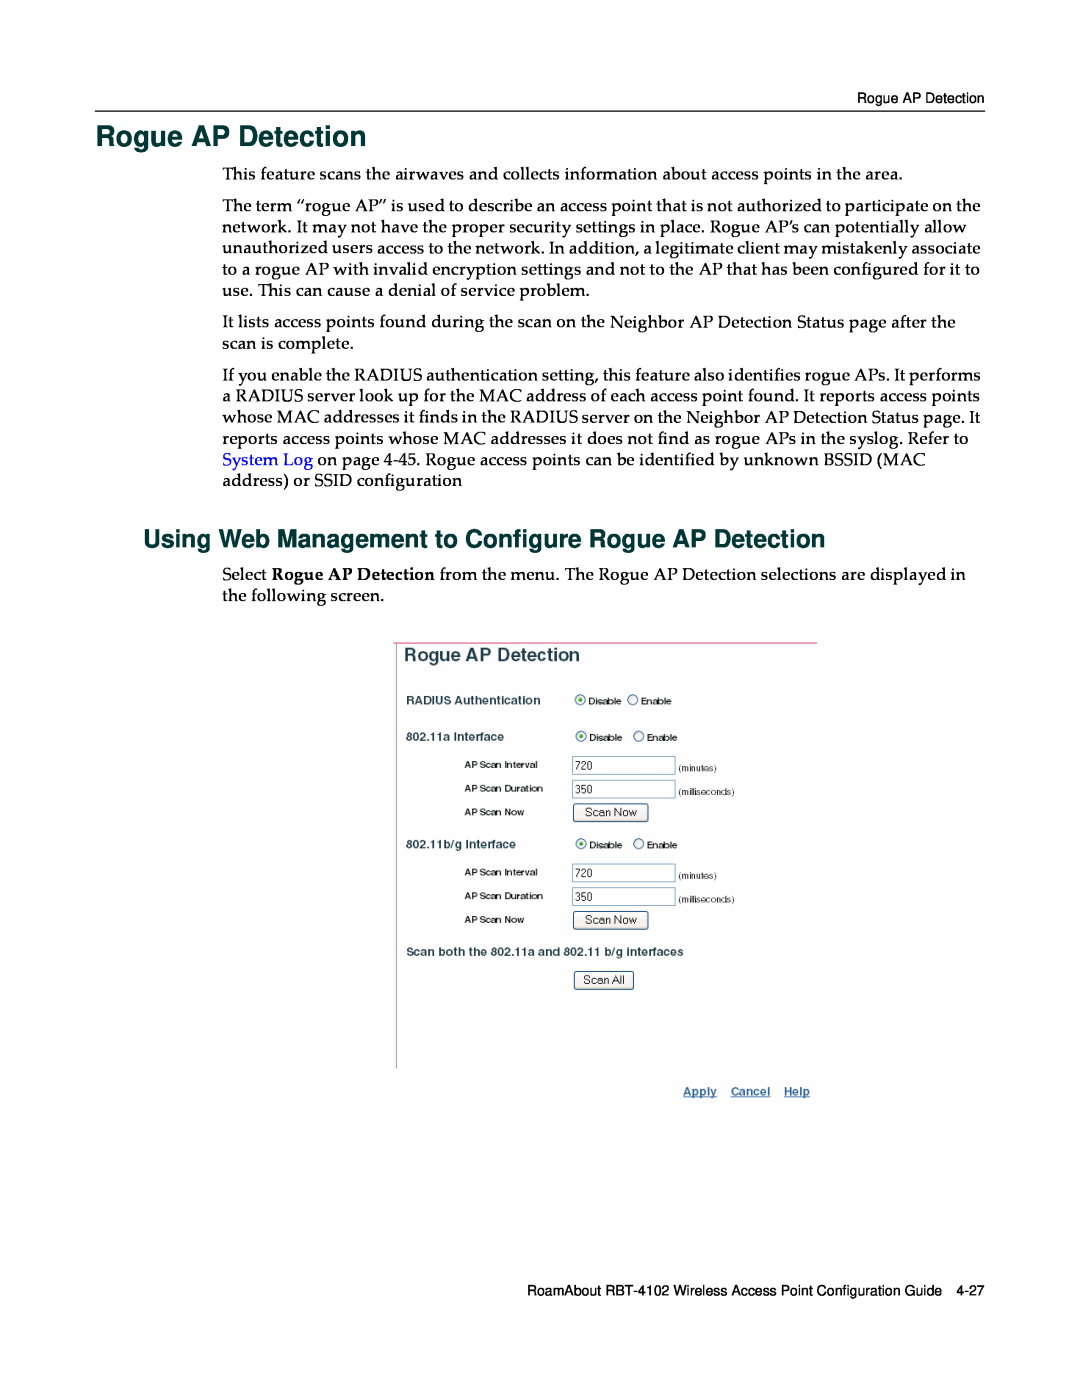 Enterasys Networks RBT-4102 manual Using Web Management to Configure Rogue AP Detection 